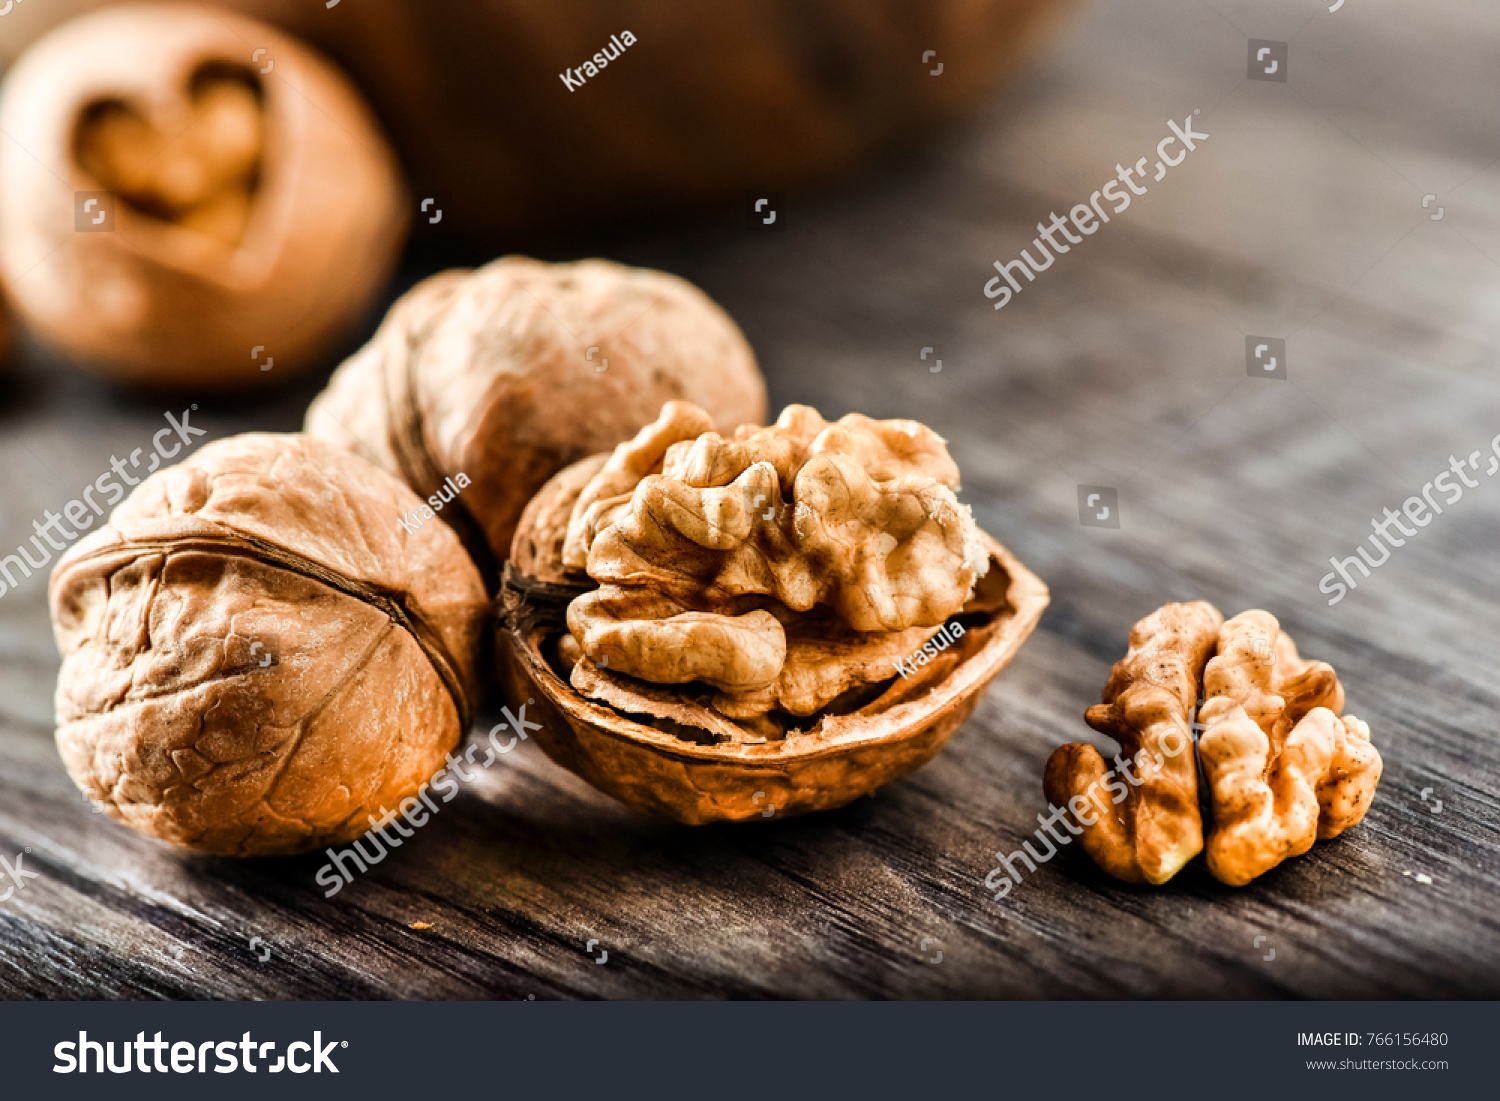 Walnuts on dark vintage table, Walnuts kernels in wooden bowl. Walnut healthy food #766156480